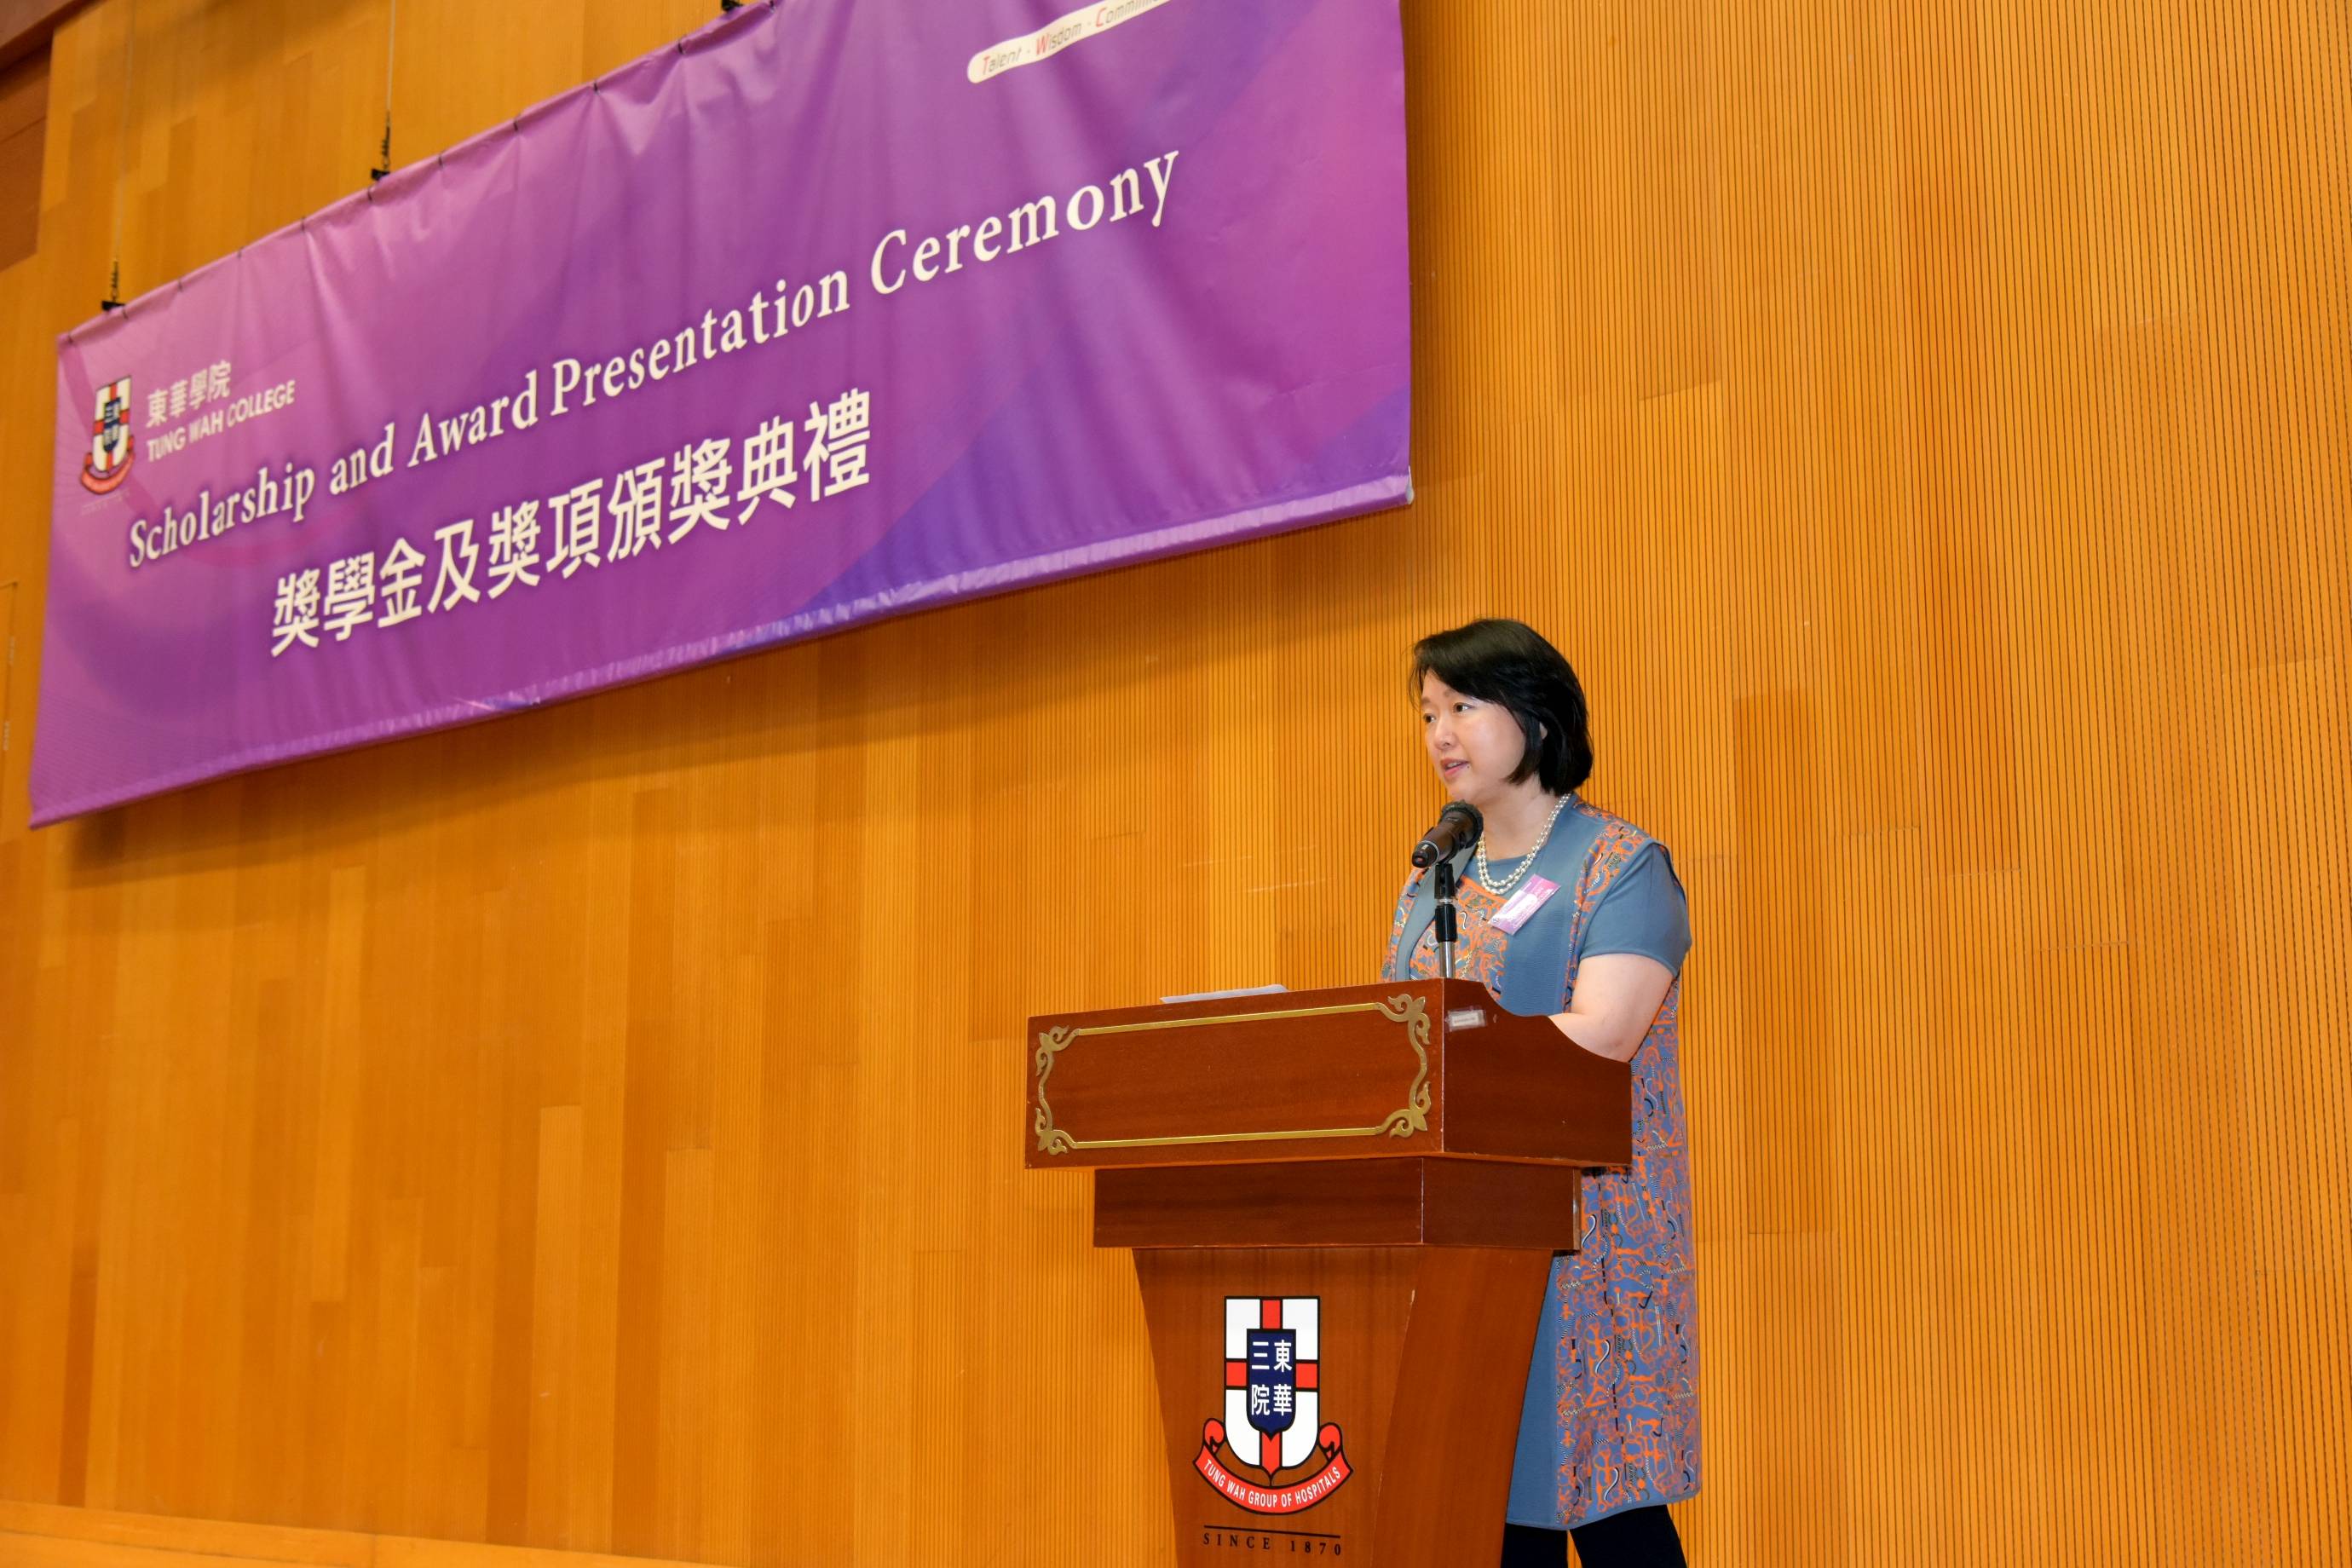 Scholarship and Award Presentation Ceremony 2019